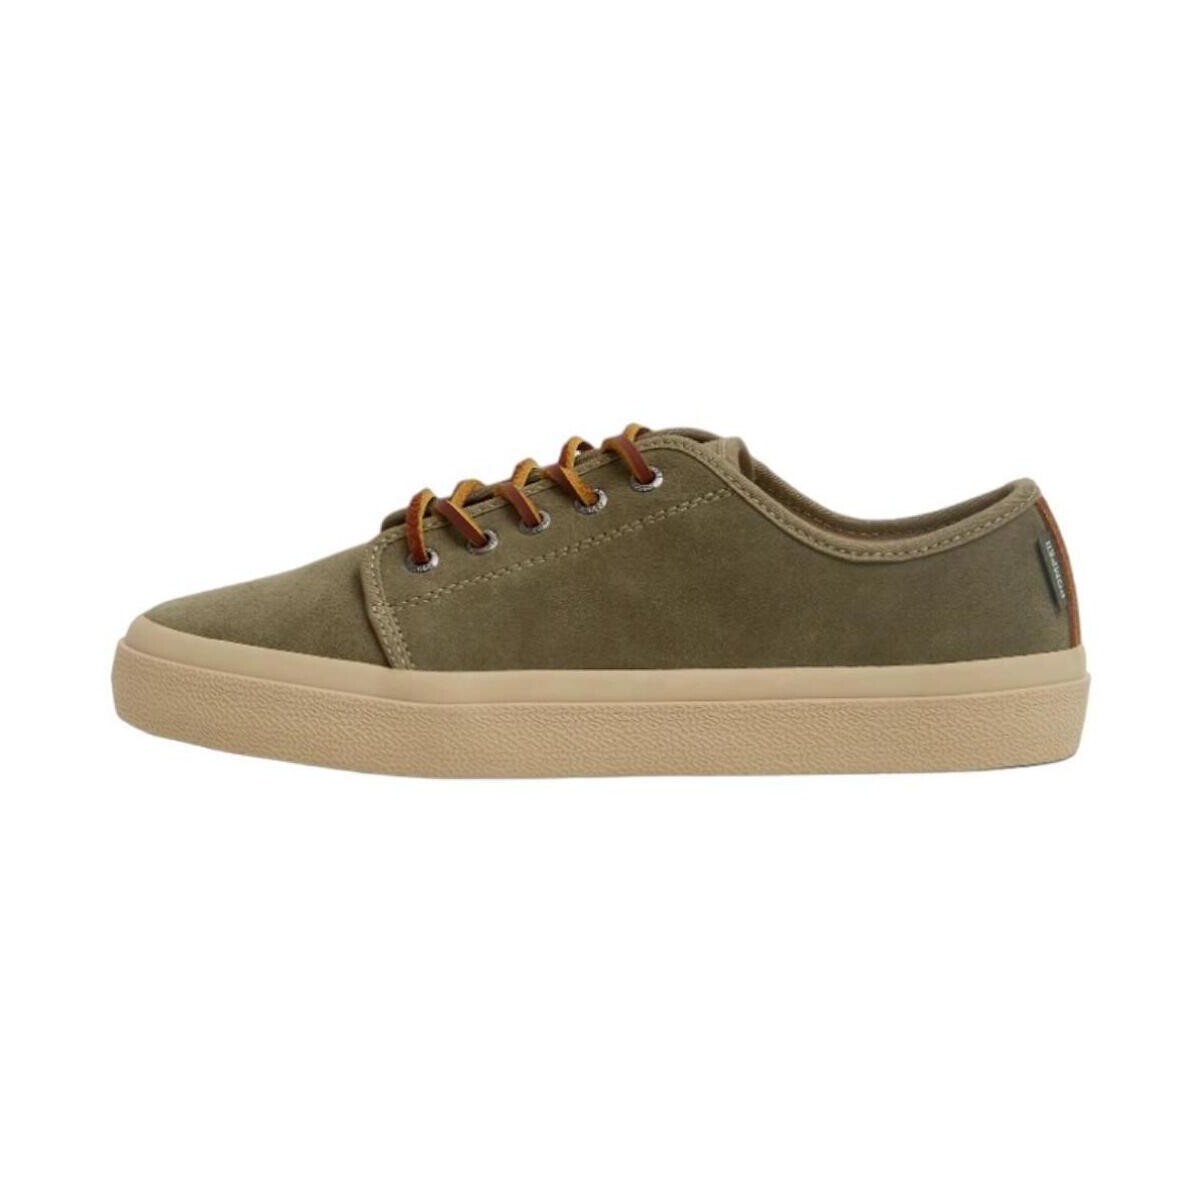 Skor Herr Sneakers Pompeii  Grön